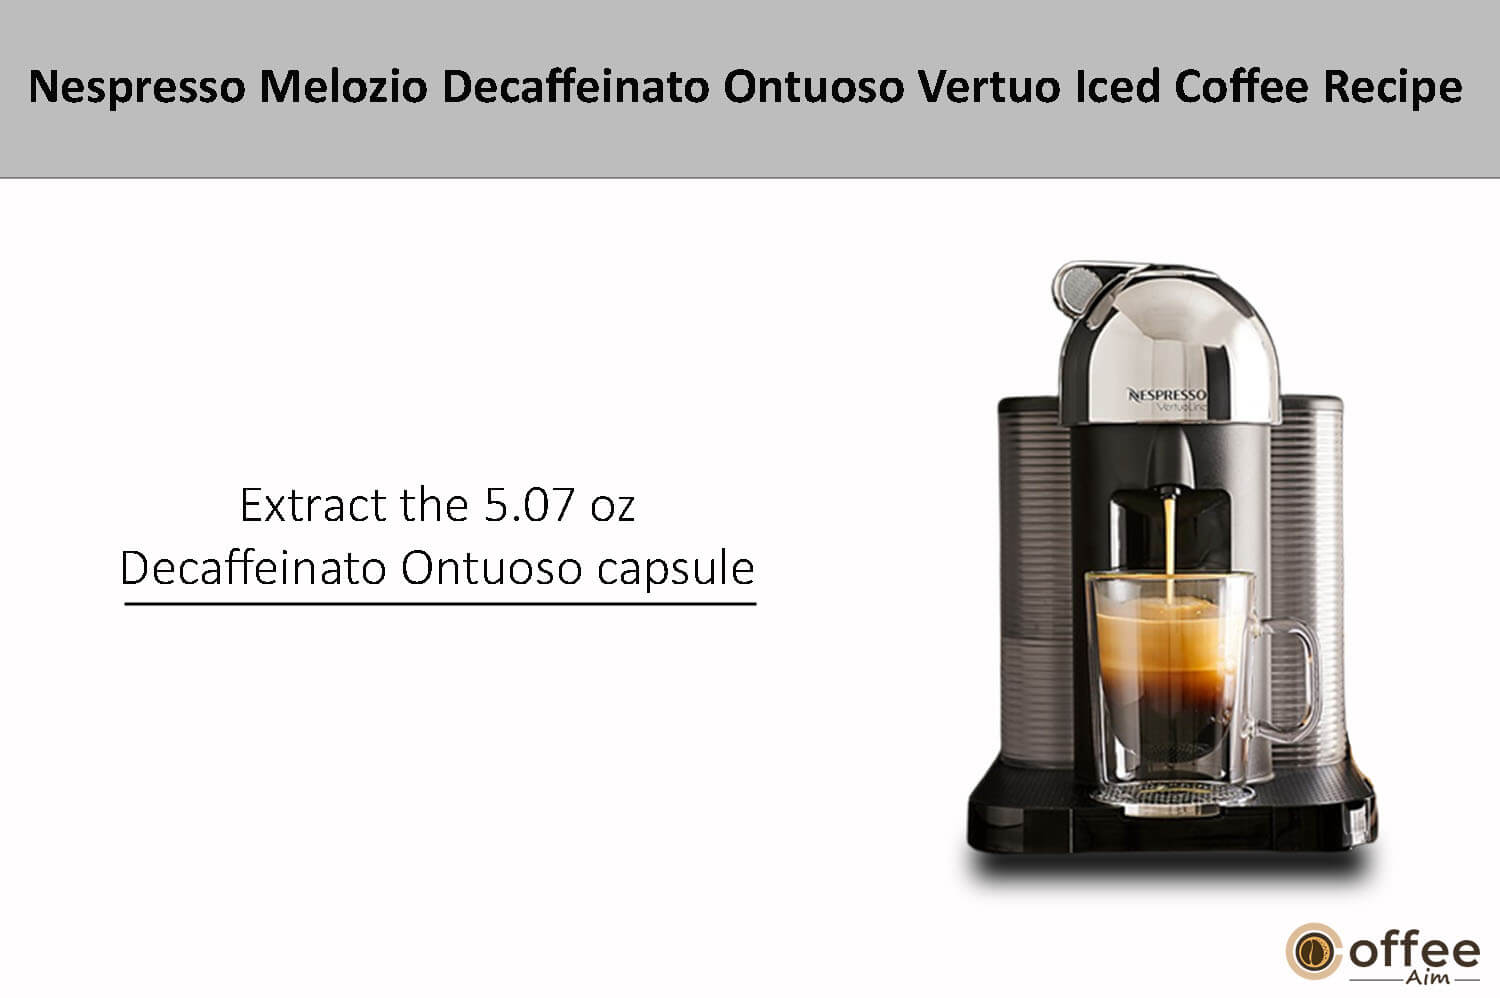 In this image i explain extract the 5.07 oz decaffeinato ontuoso capsule with your Nespresso VertuoLine machine in the coffee mug.